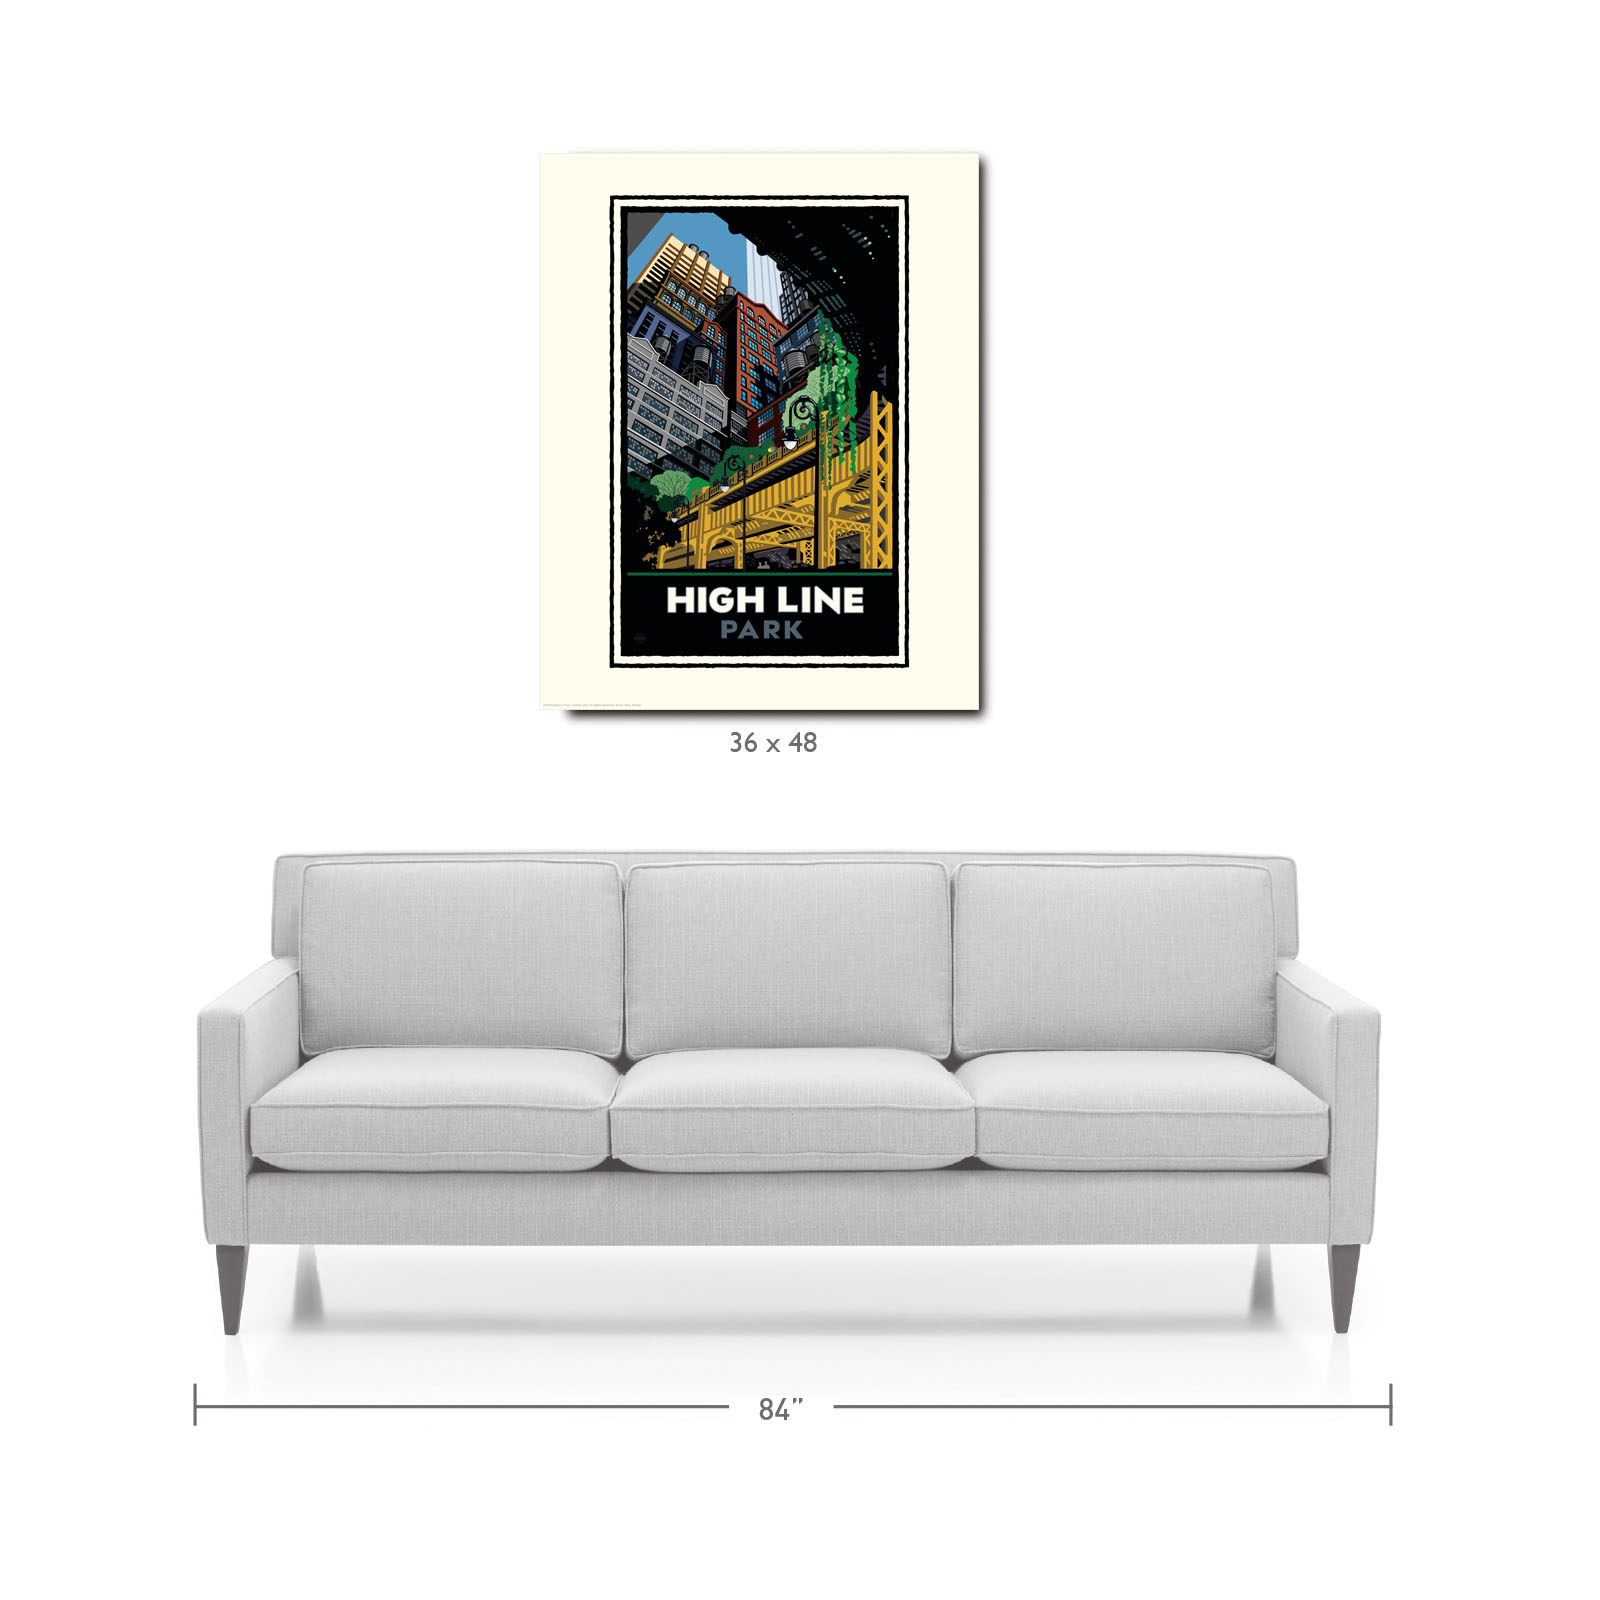 Landmark NY  High Line Park NYC - Legendary Landmark Art Prints